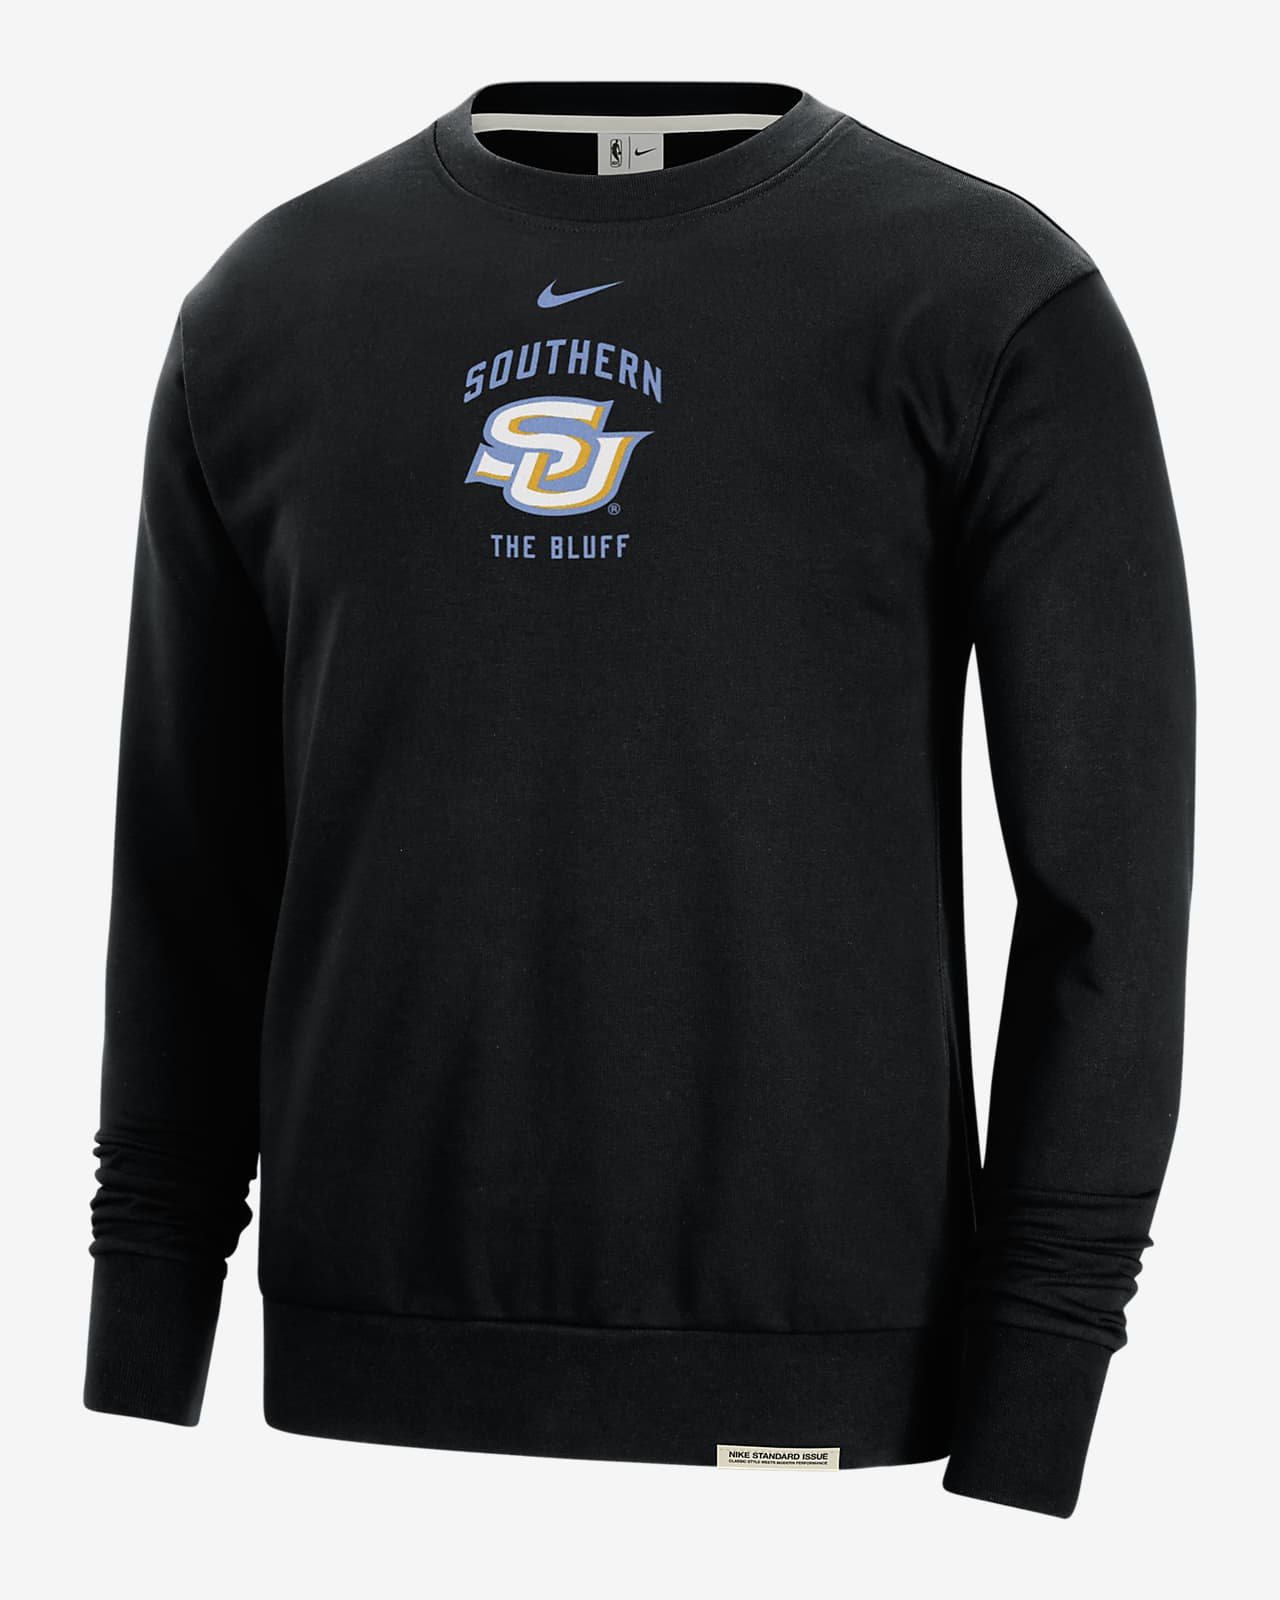 Southern Standard Issue Men's Nike College Fleece Crew-Neck Sweatshirt